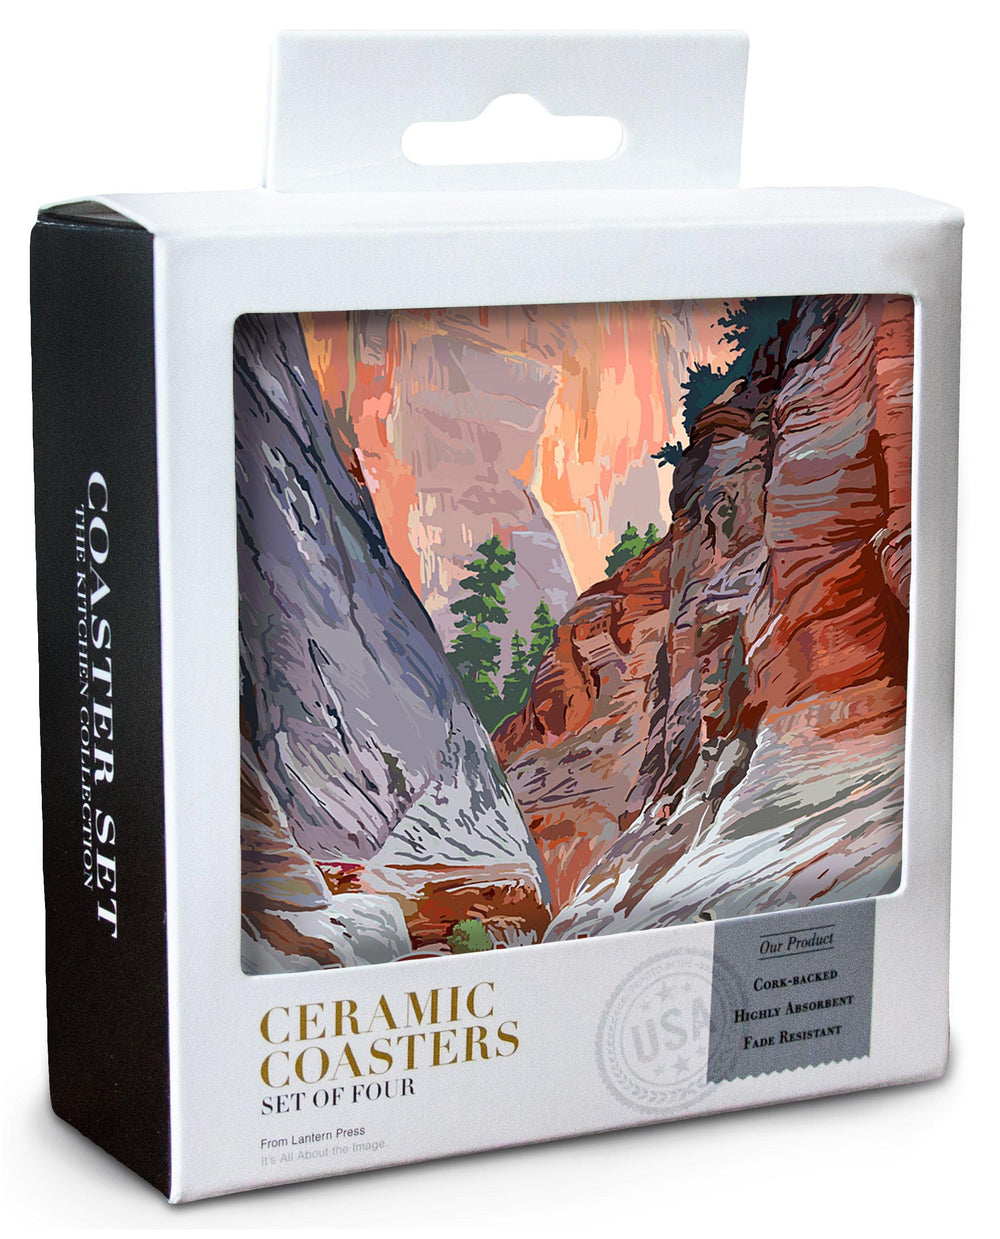 Zion National Park, Utah, Slot Canyon, Lantern Press Artwork, Coaster Set Coasters Lantern Press 